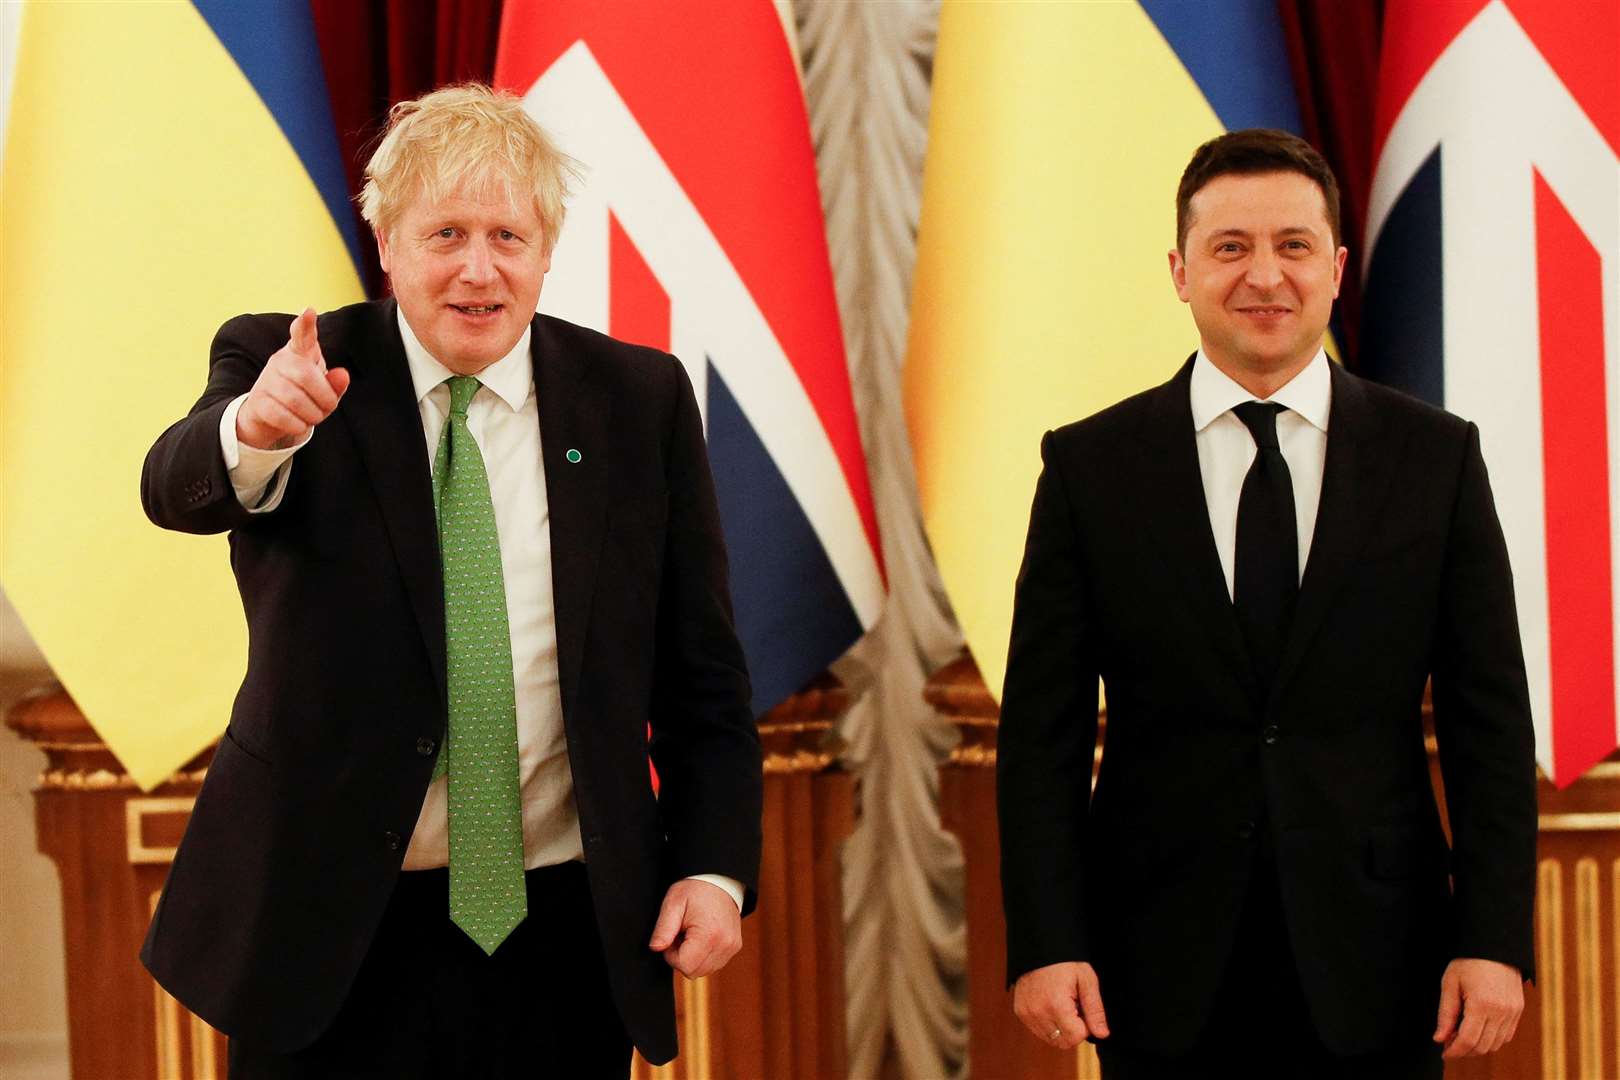 Boris Johnson in Kyiv last week for crisis talks with Ukrainian President Volodymyr Zelensky (Peter Nicholls/PA)